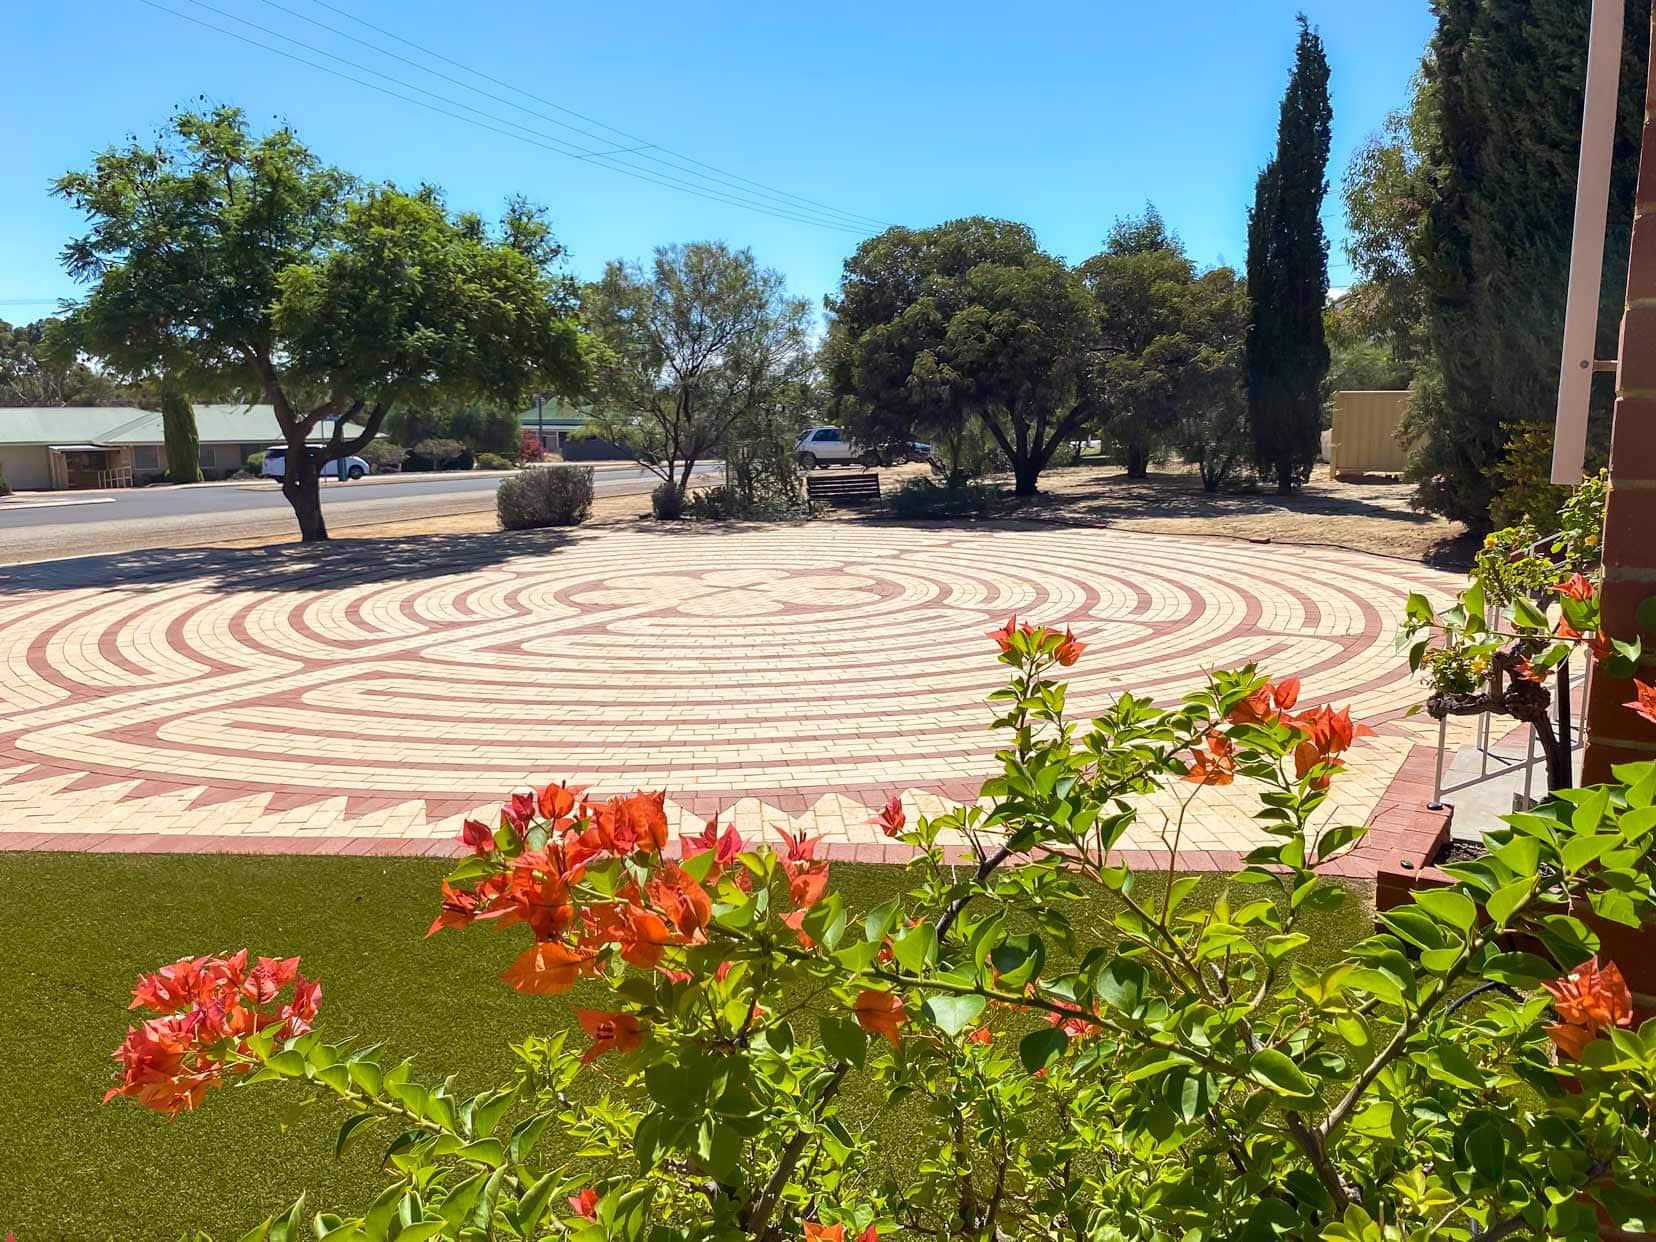 Quairading labyrinth -a geometric pattern on pavers